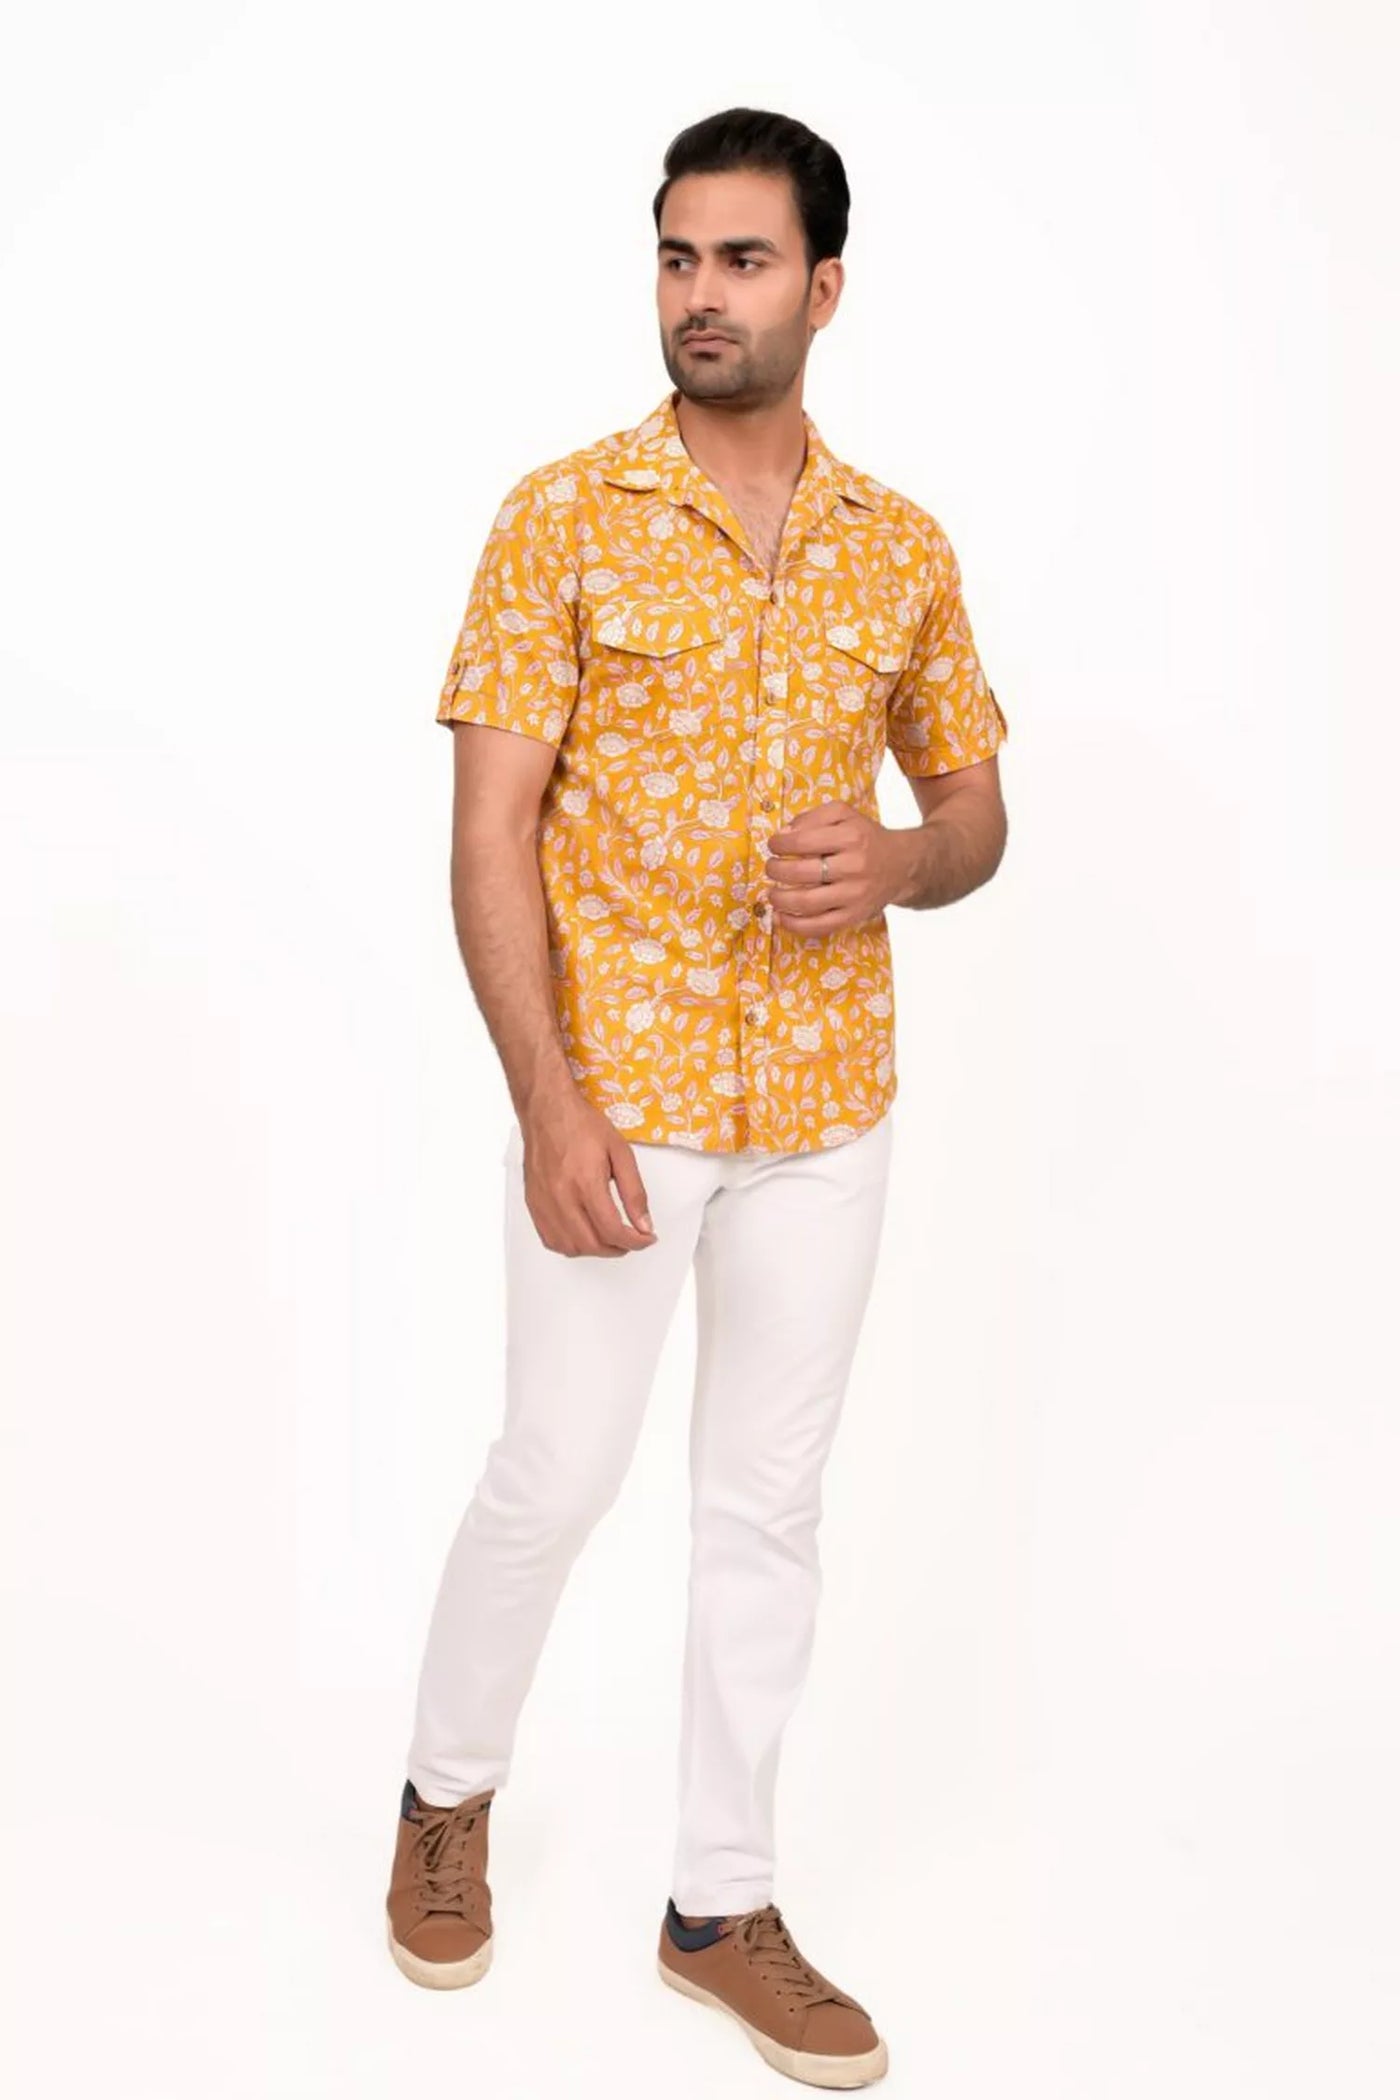 Mango Yellow Printed Half Sleeve Shirt